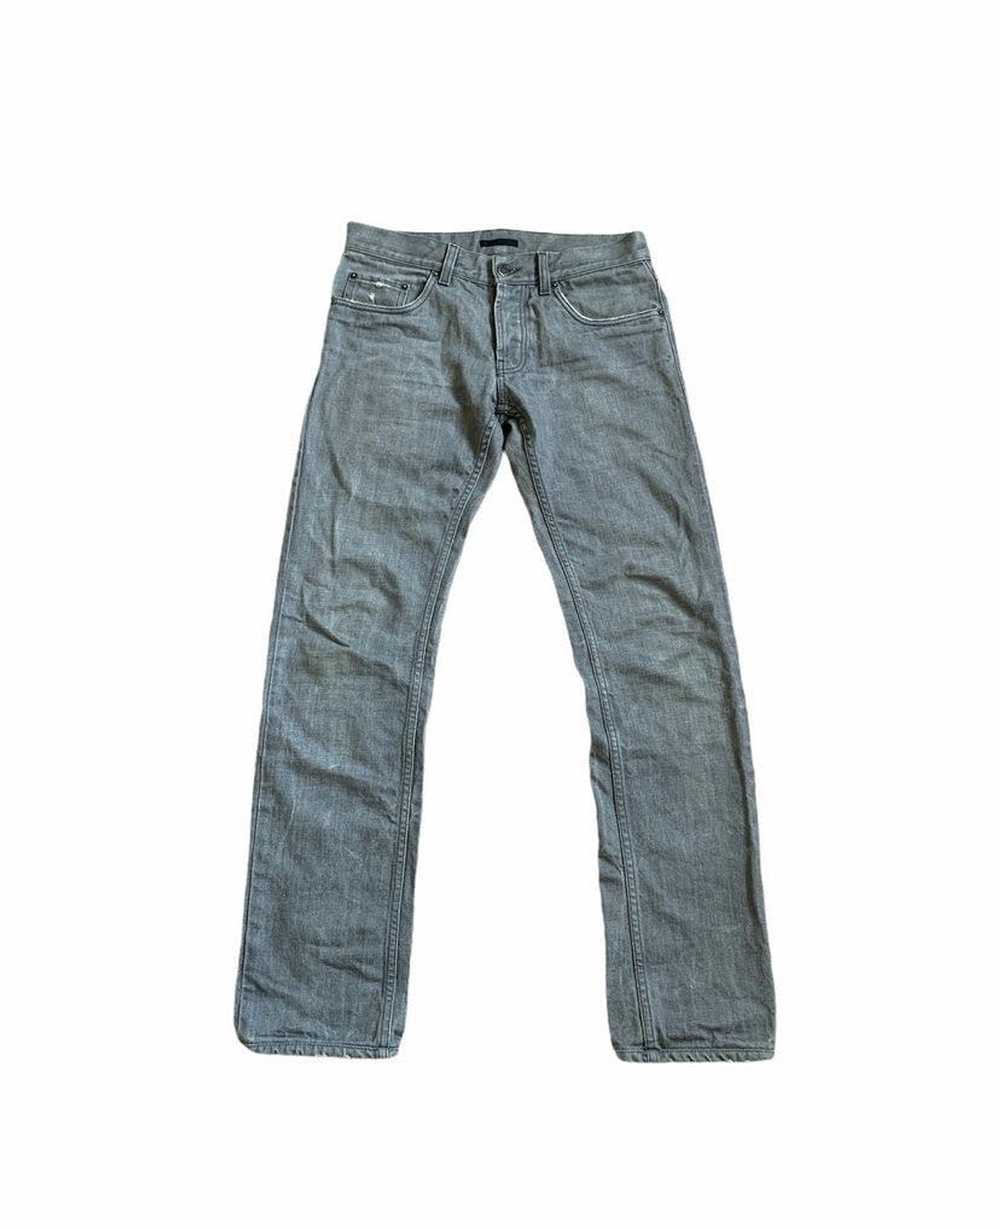 Prada Prada Milano Denim Jeans - image 1